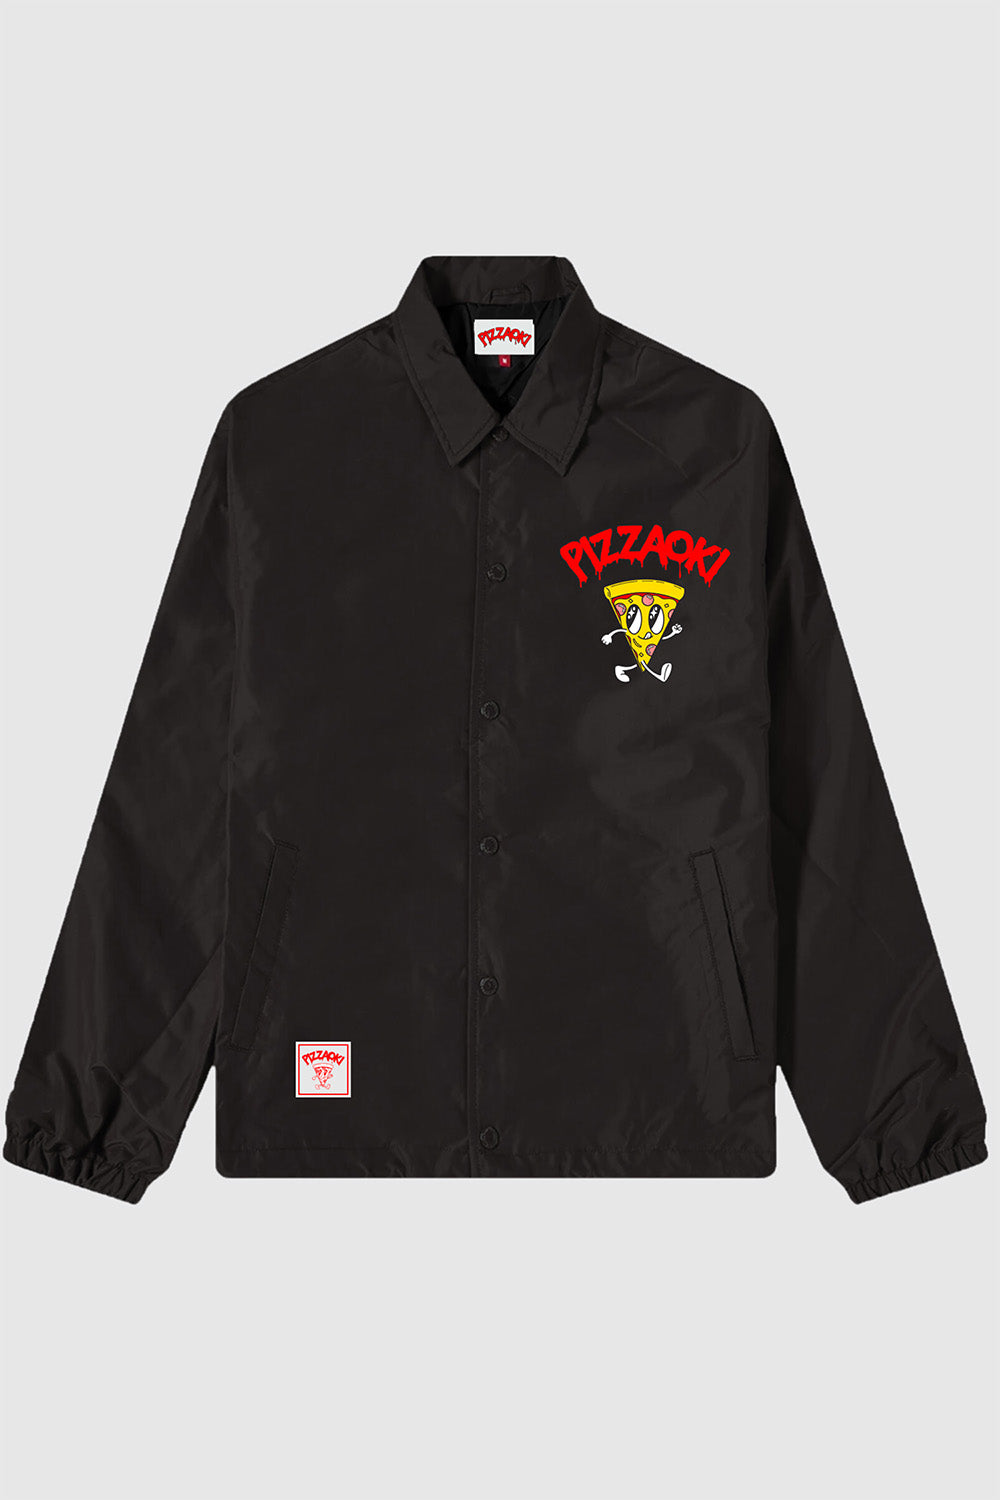 Pizzaoki Graphic Jacket - Black